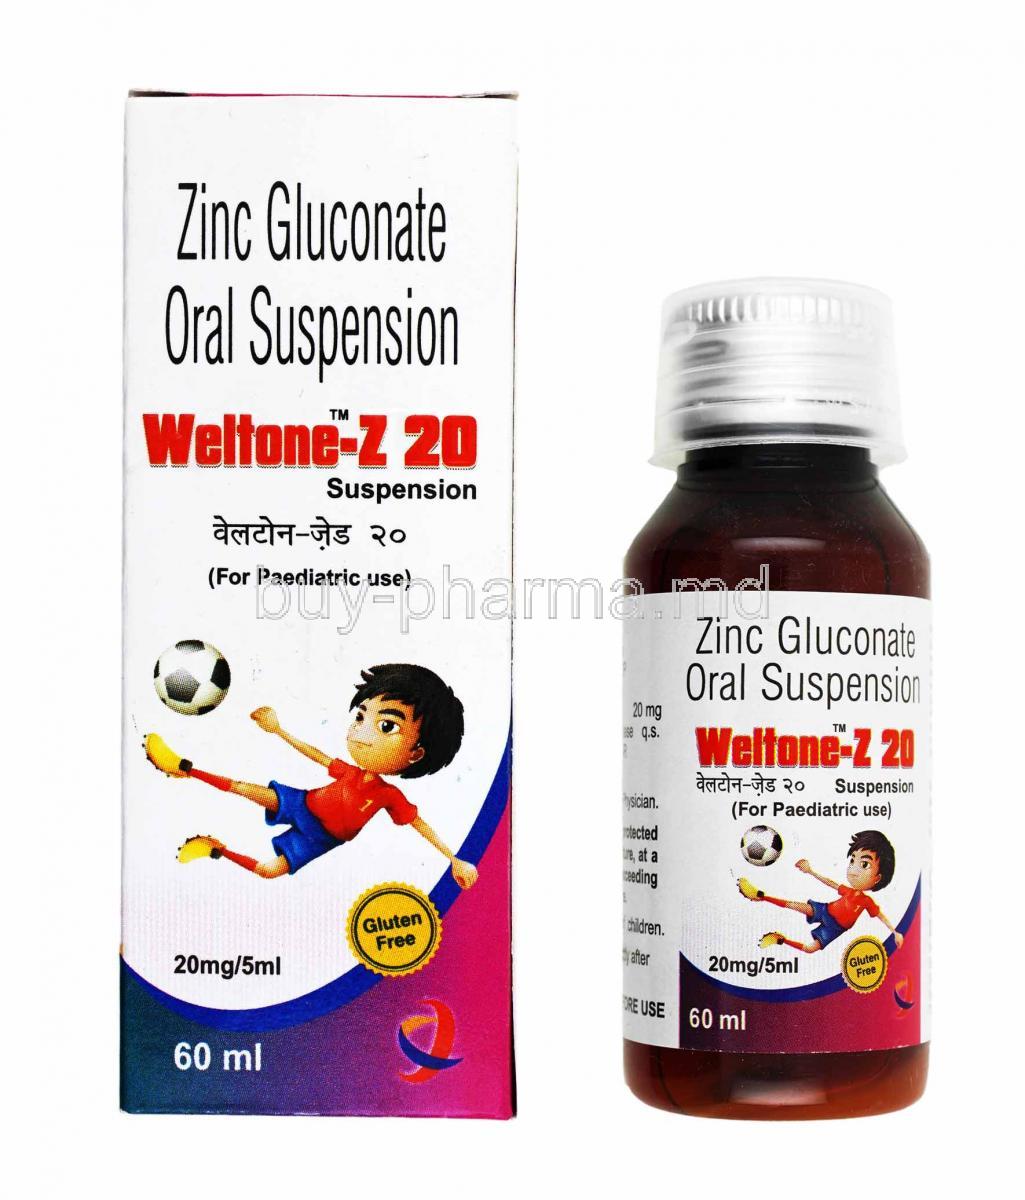 Weltone-Z Oral Suspension, Zinc Gluconate box and bottle